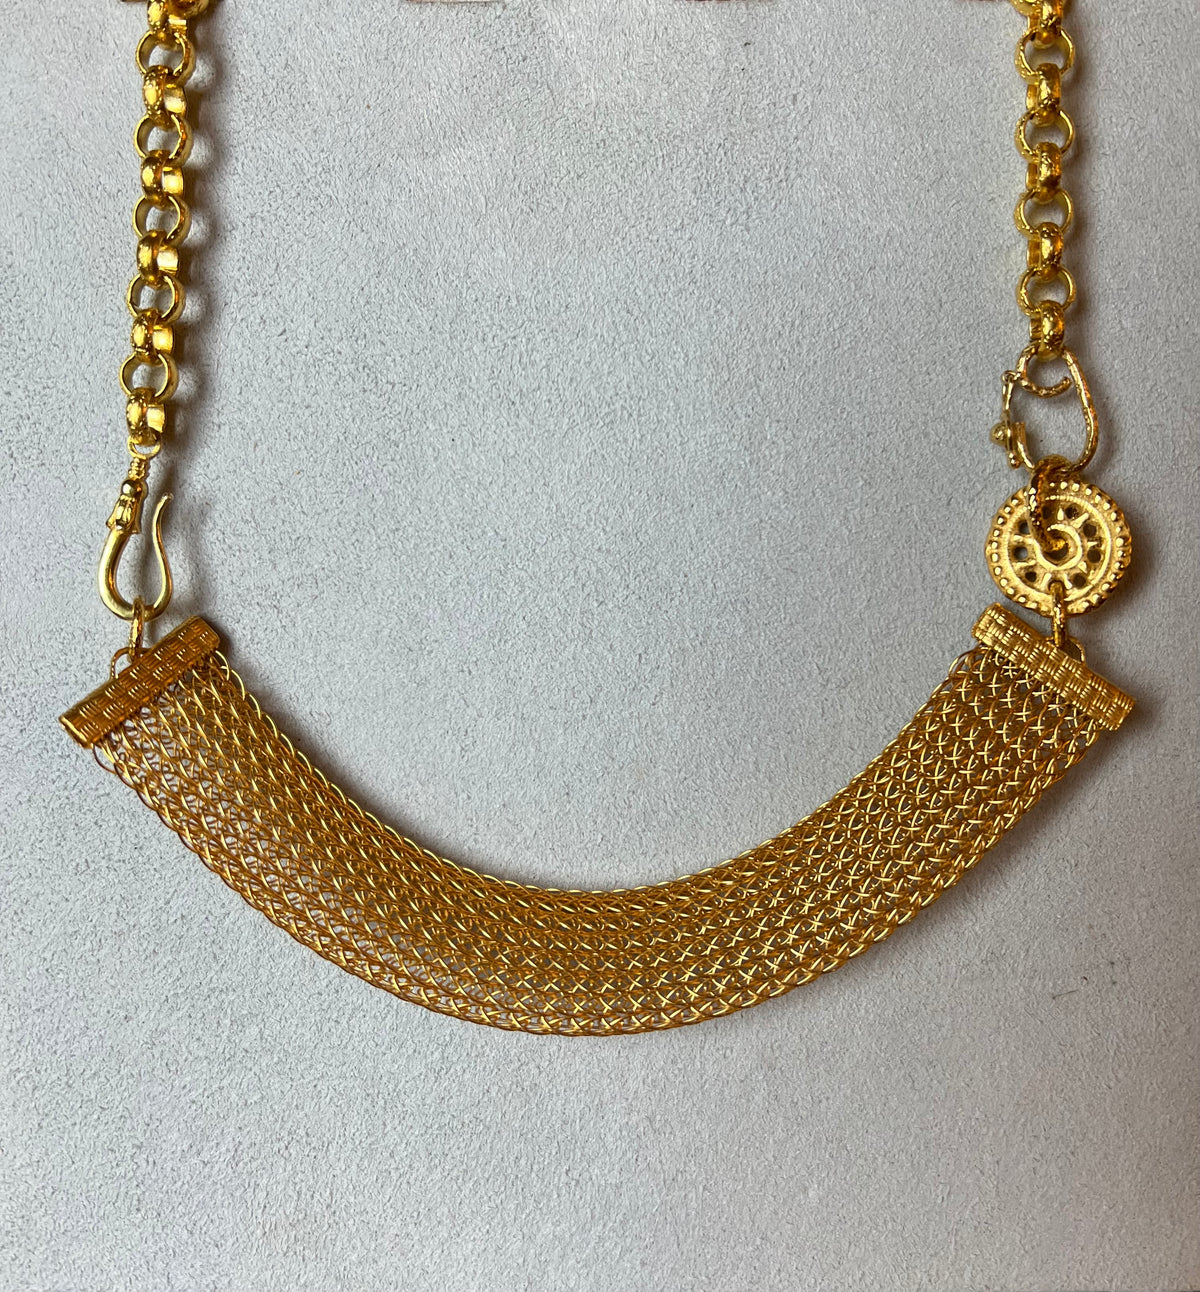 U-Chain Collar Necklace - Gold